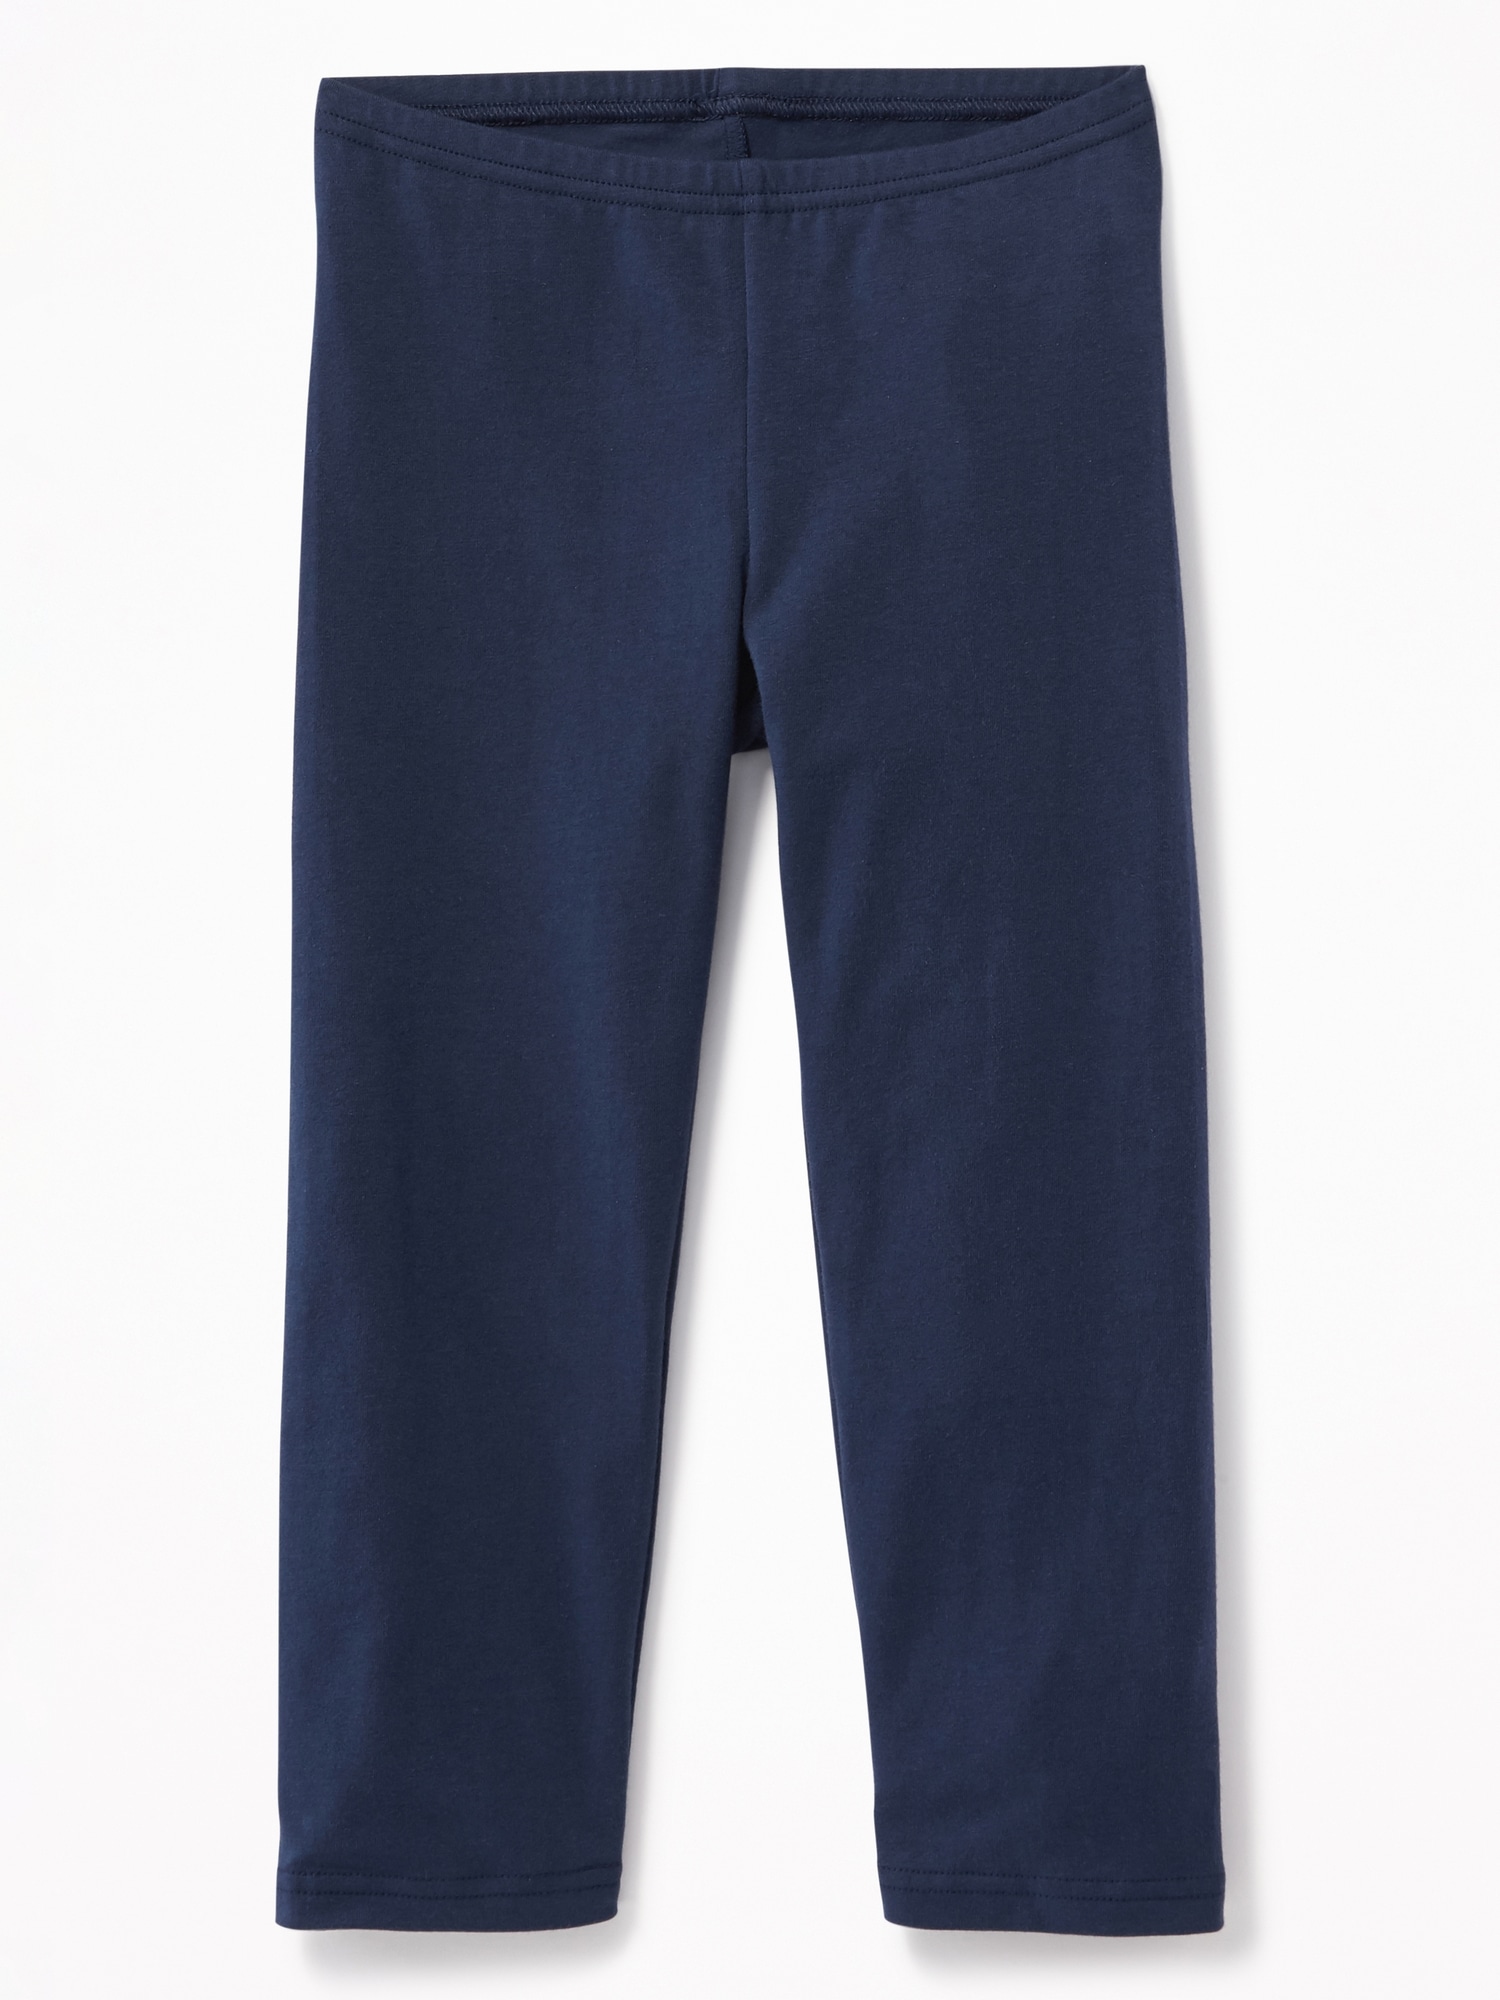 Old Navy Short Crop Jersey Leggings for Girls blue. 1